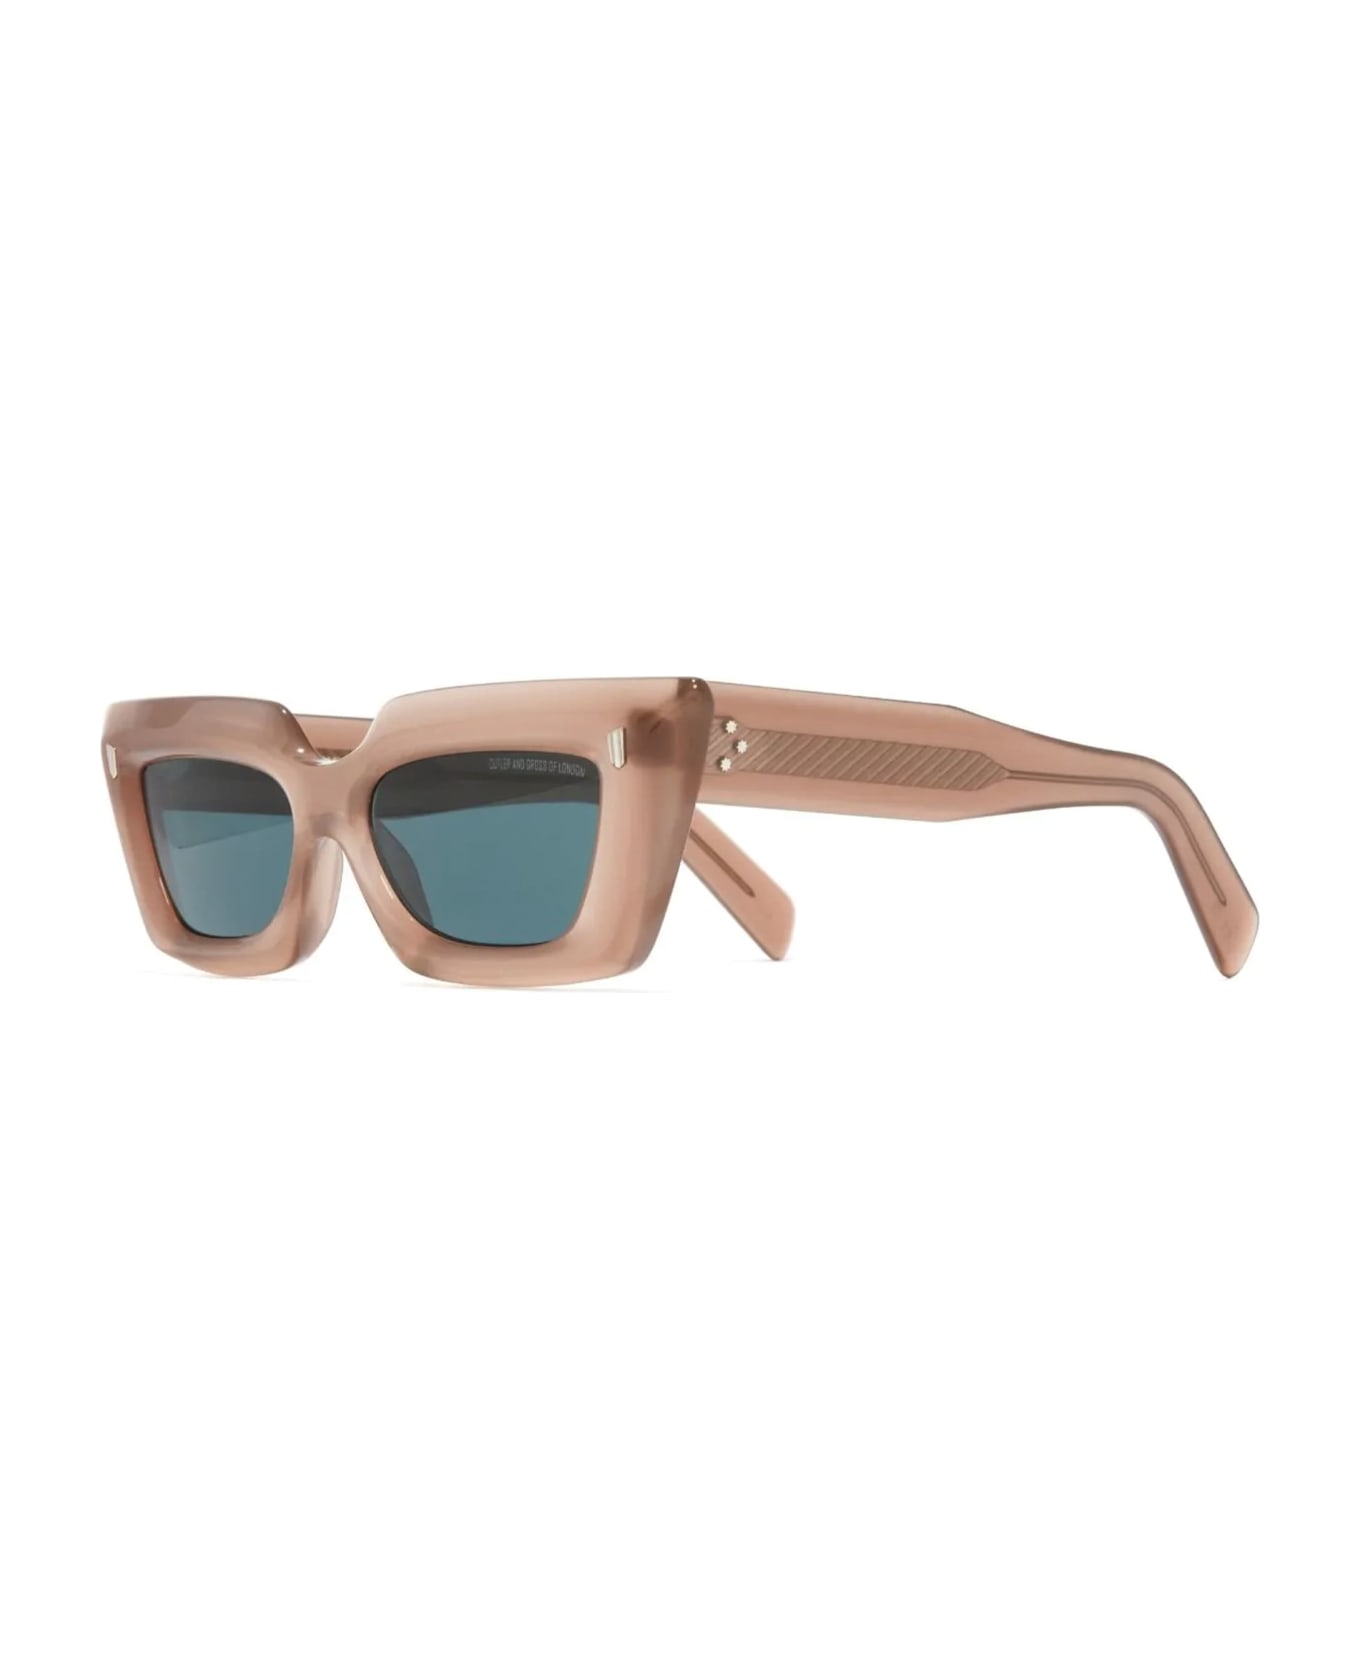 Cutler and Gross 1408 / Humble Potato Sunglasses - pink